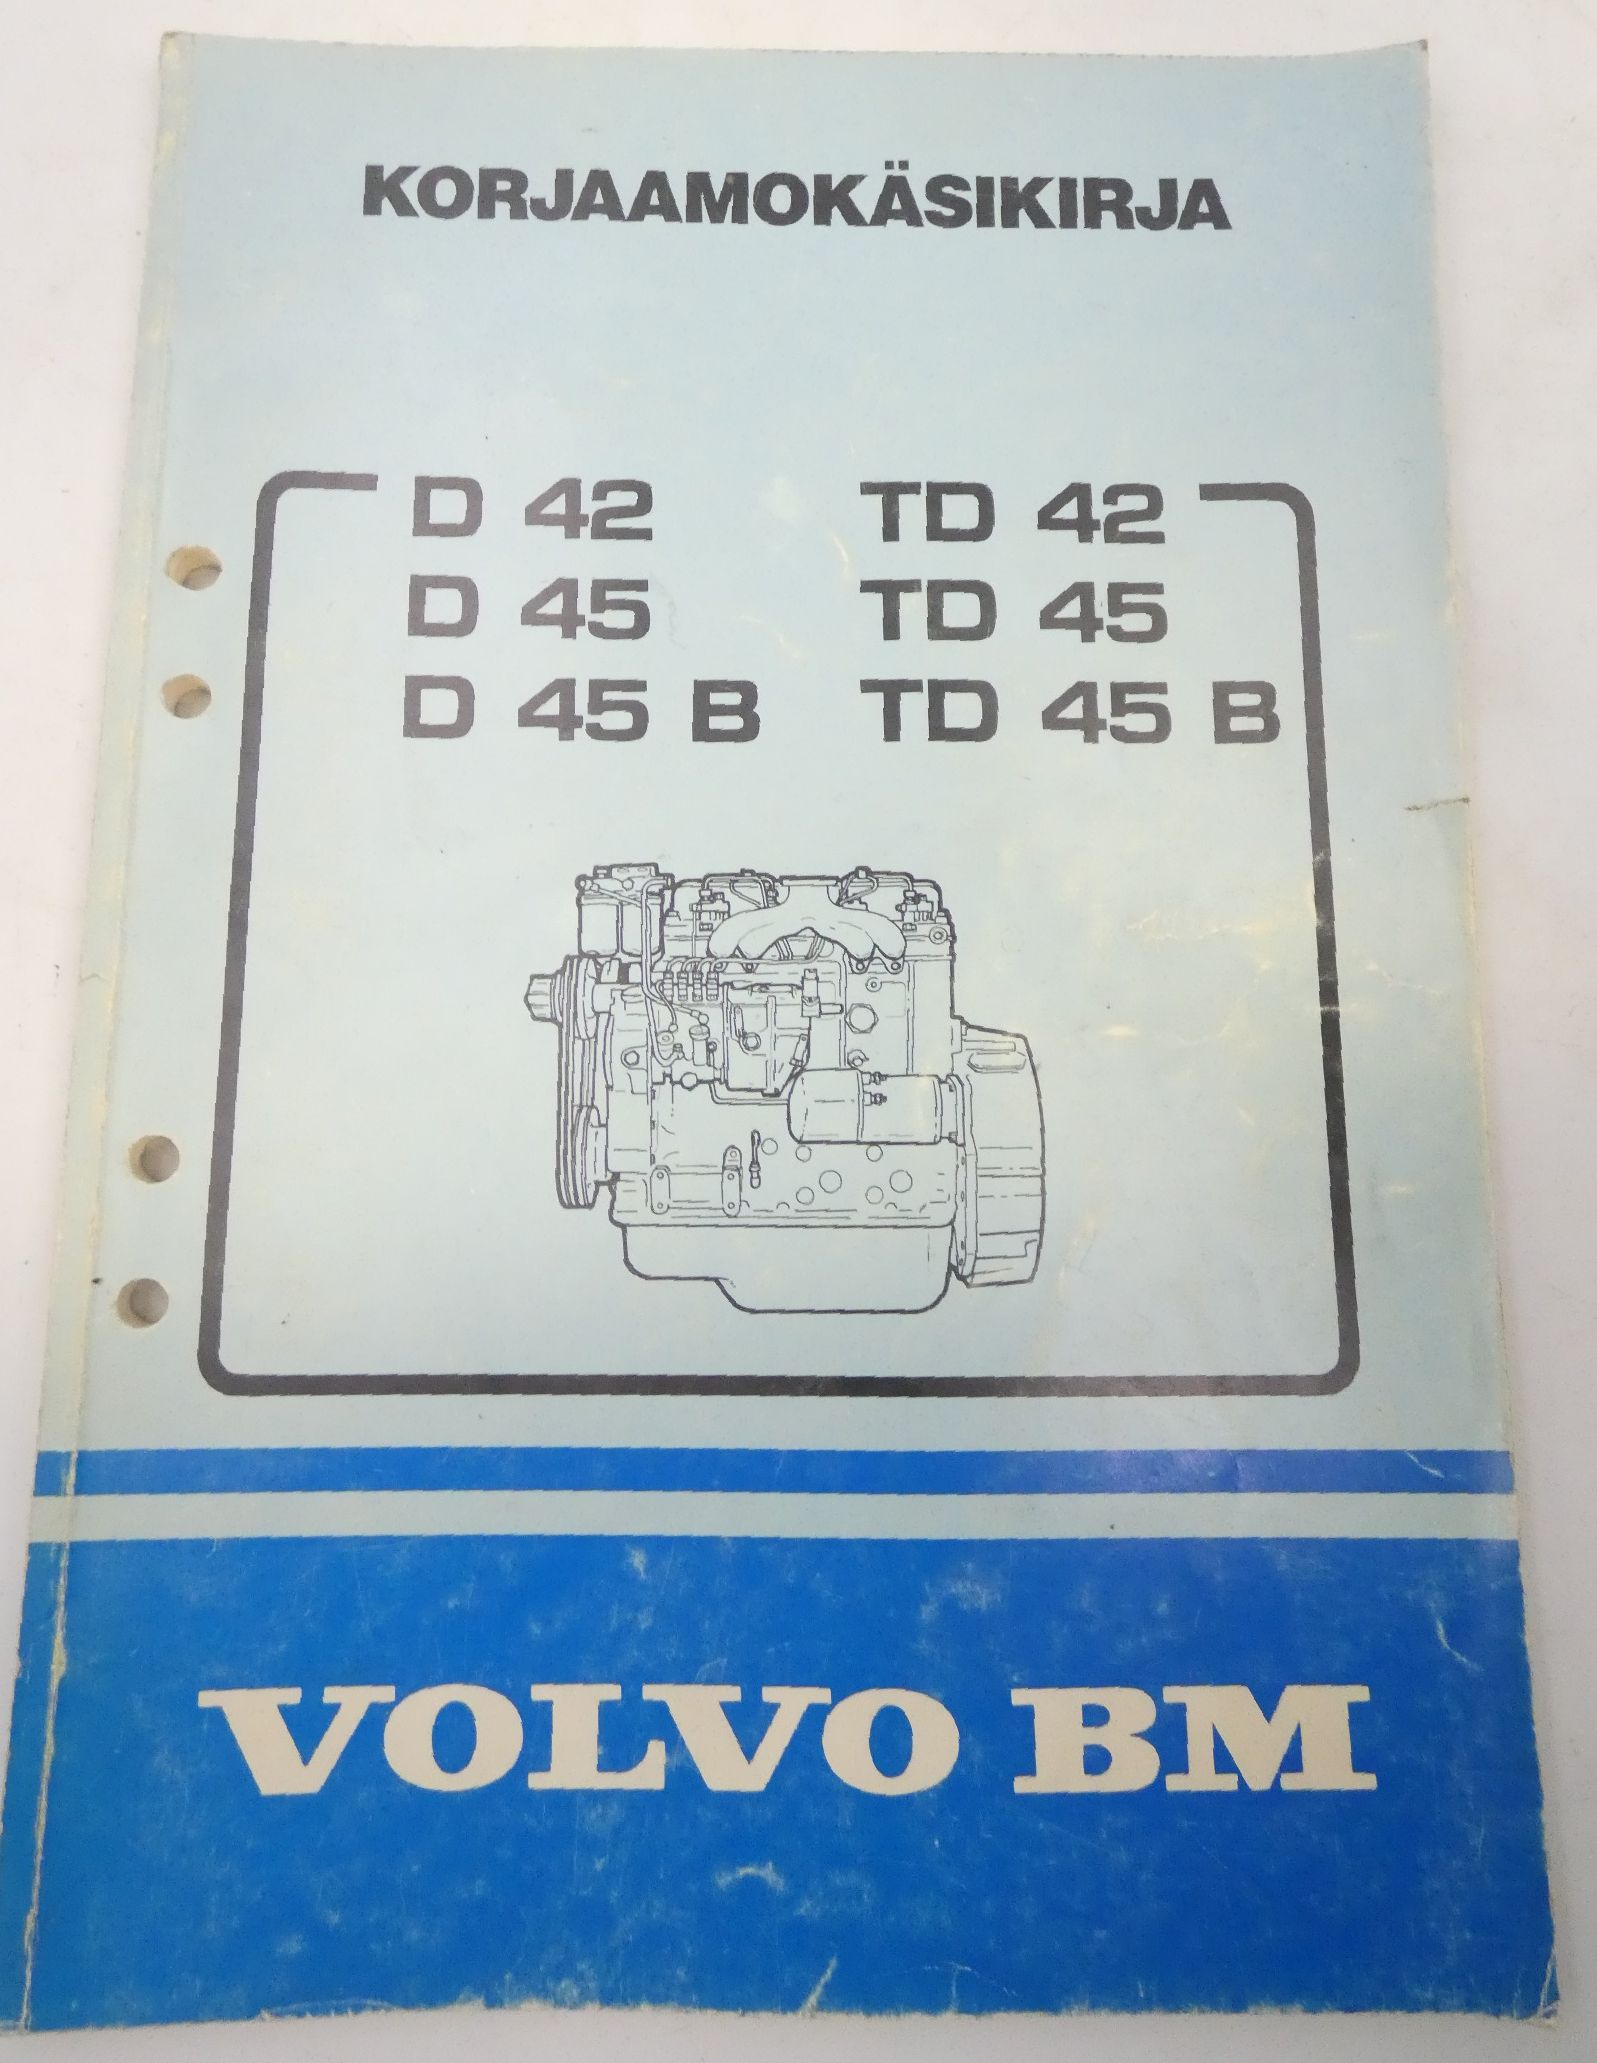 Volvo BM D42/45/45B, TD42/45/45B korjaamokäsikirja